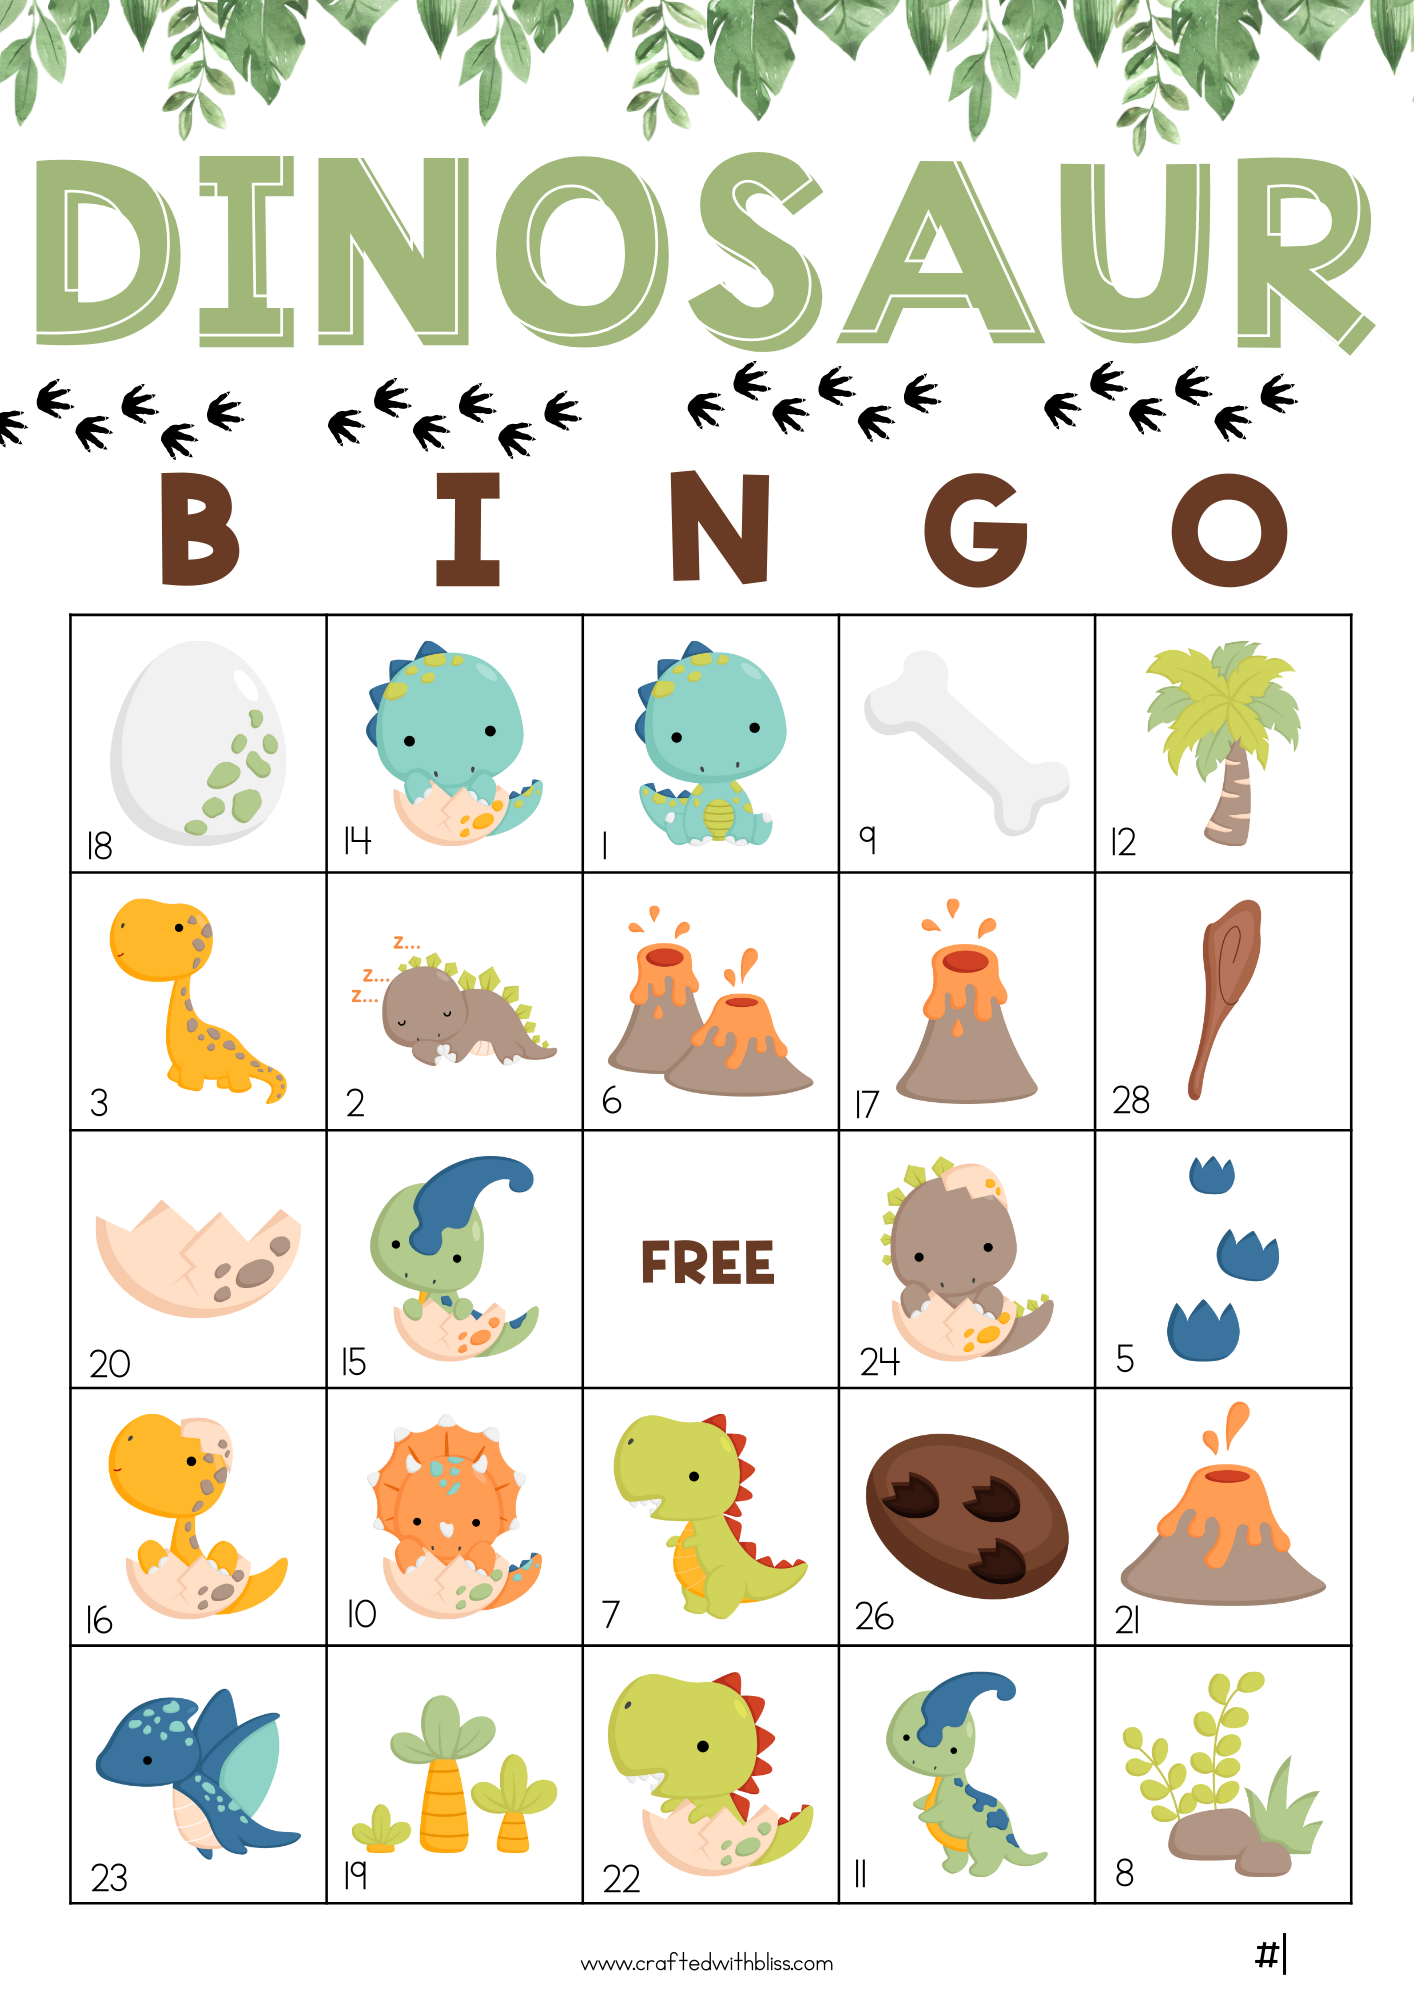 50 Dinosaur Bingo Cards (5x5)